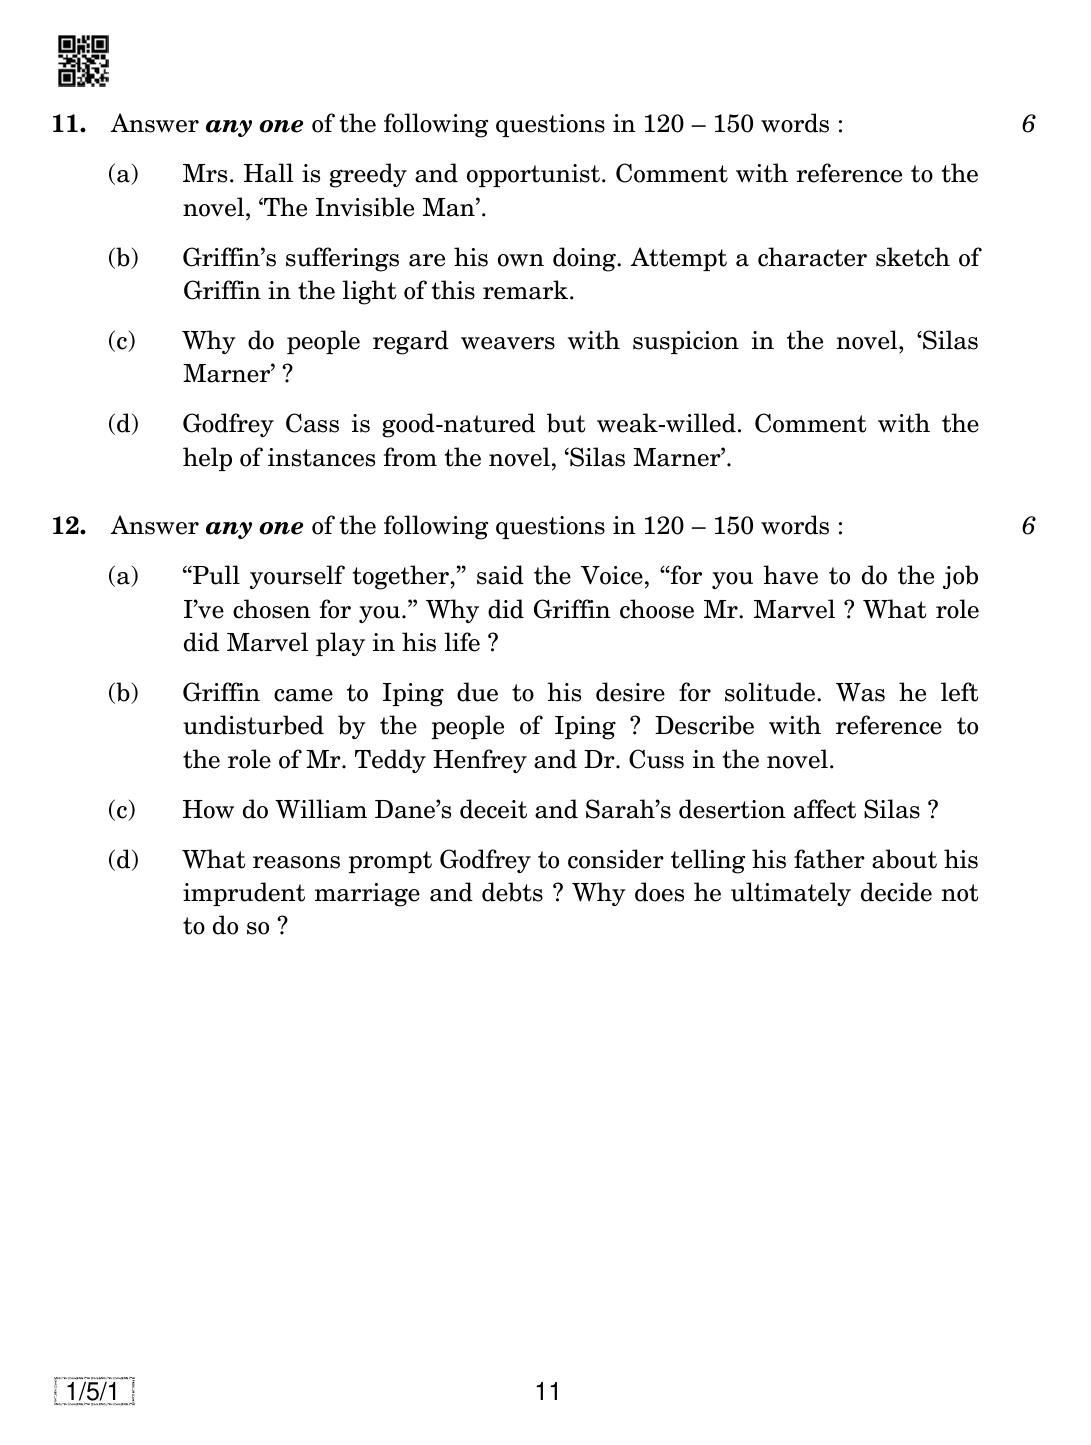 CBSE Class 12 1-5-1 English Core 2019 Question Paper - Page 11